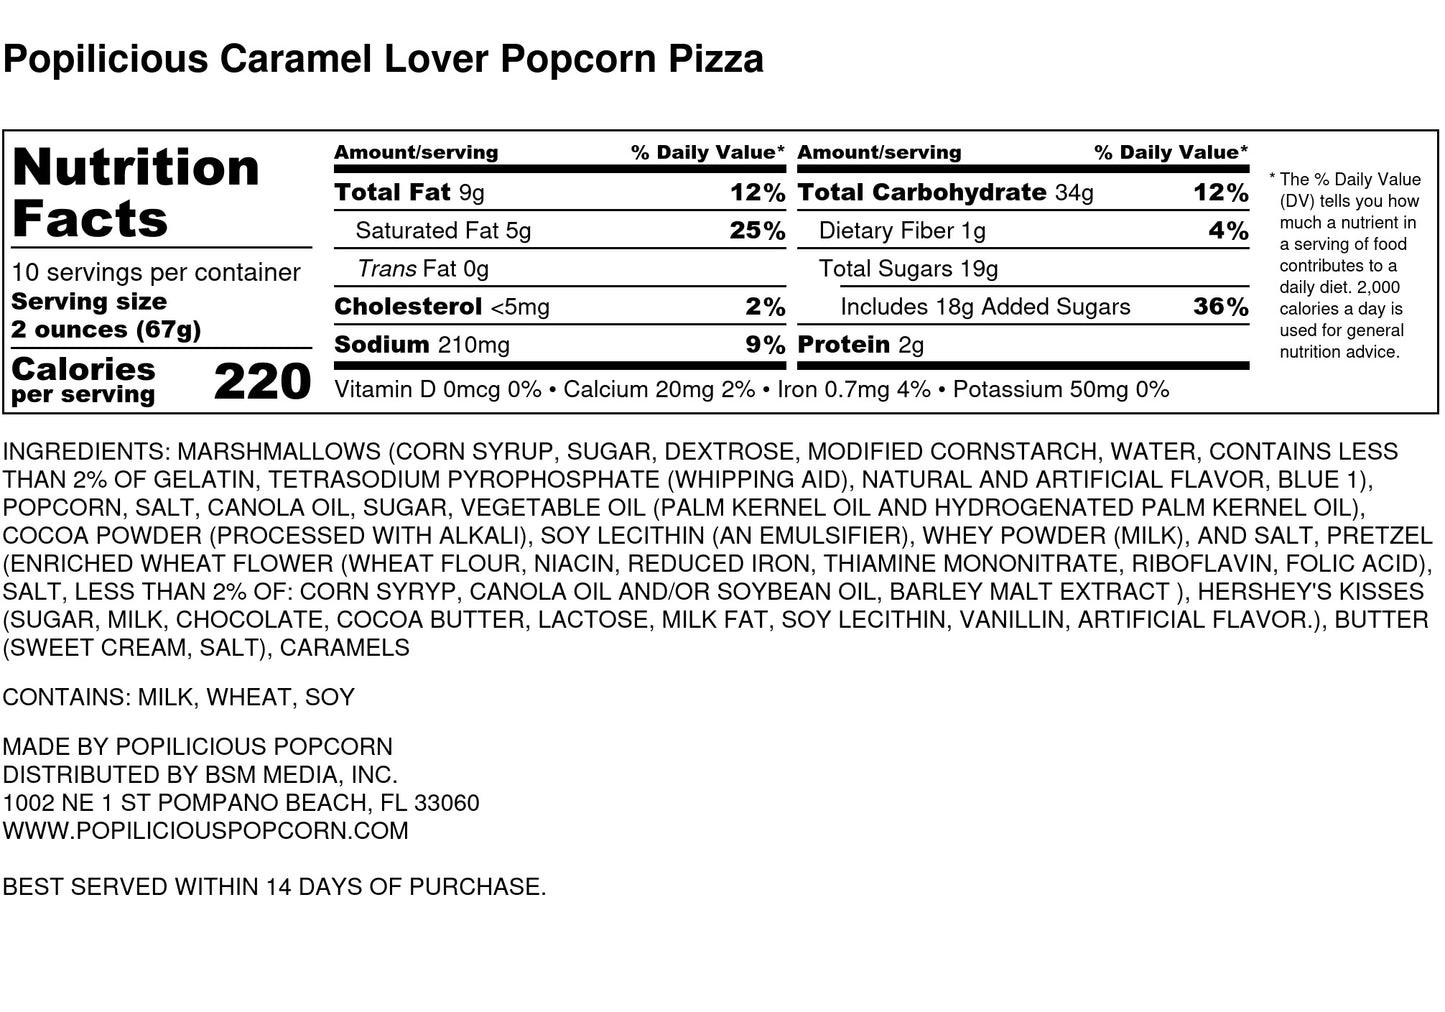 Caramel Lover's Gourmet Popcorn Pizza